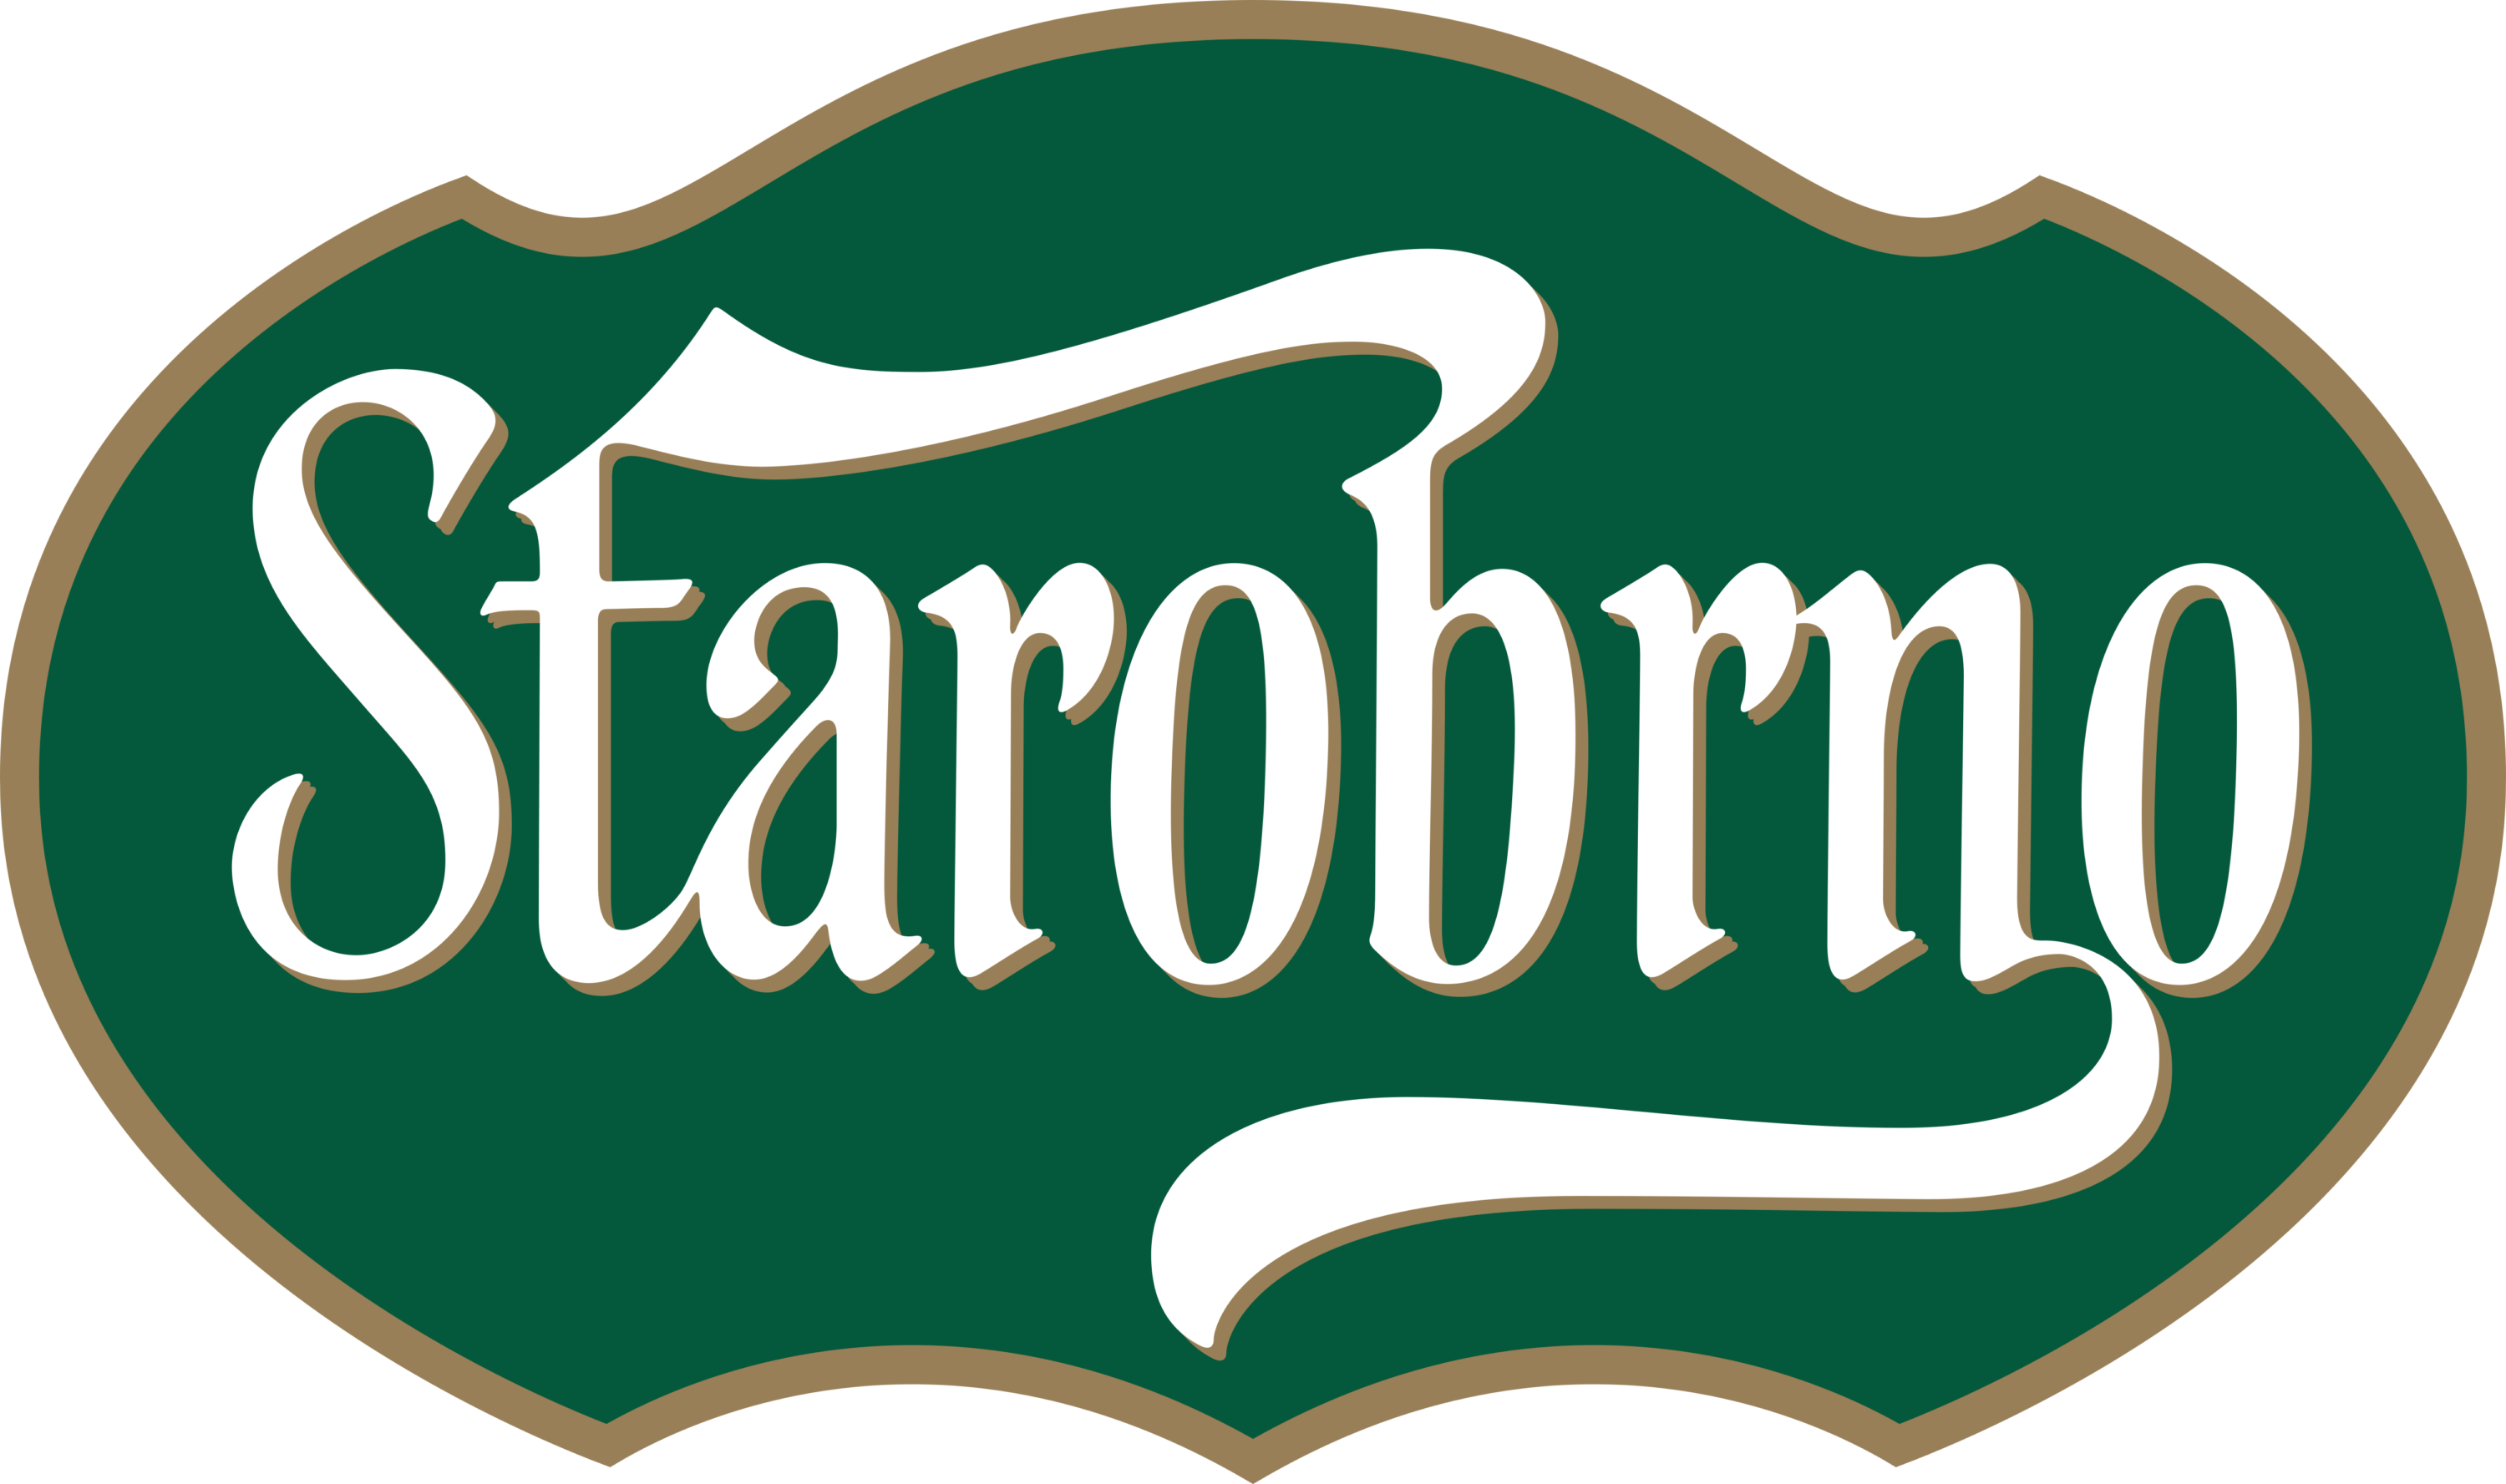 Starobrno Logo